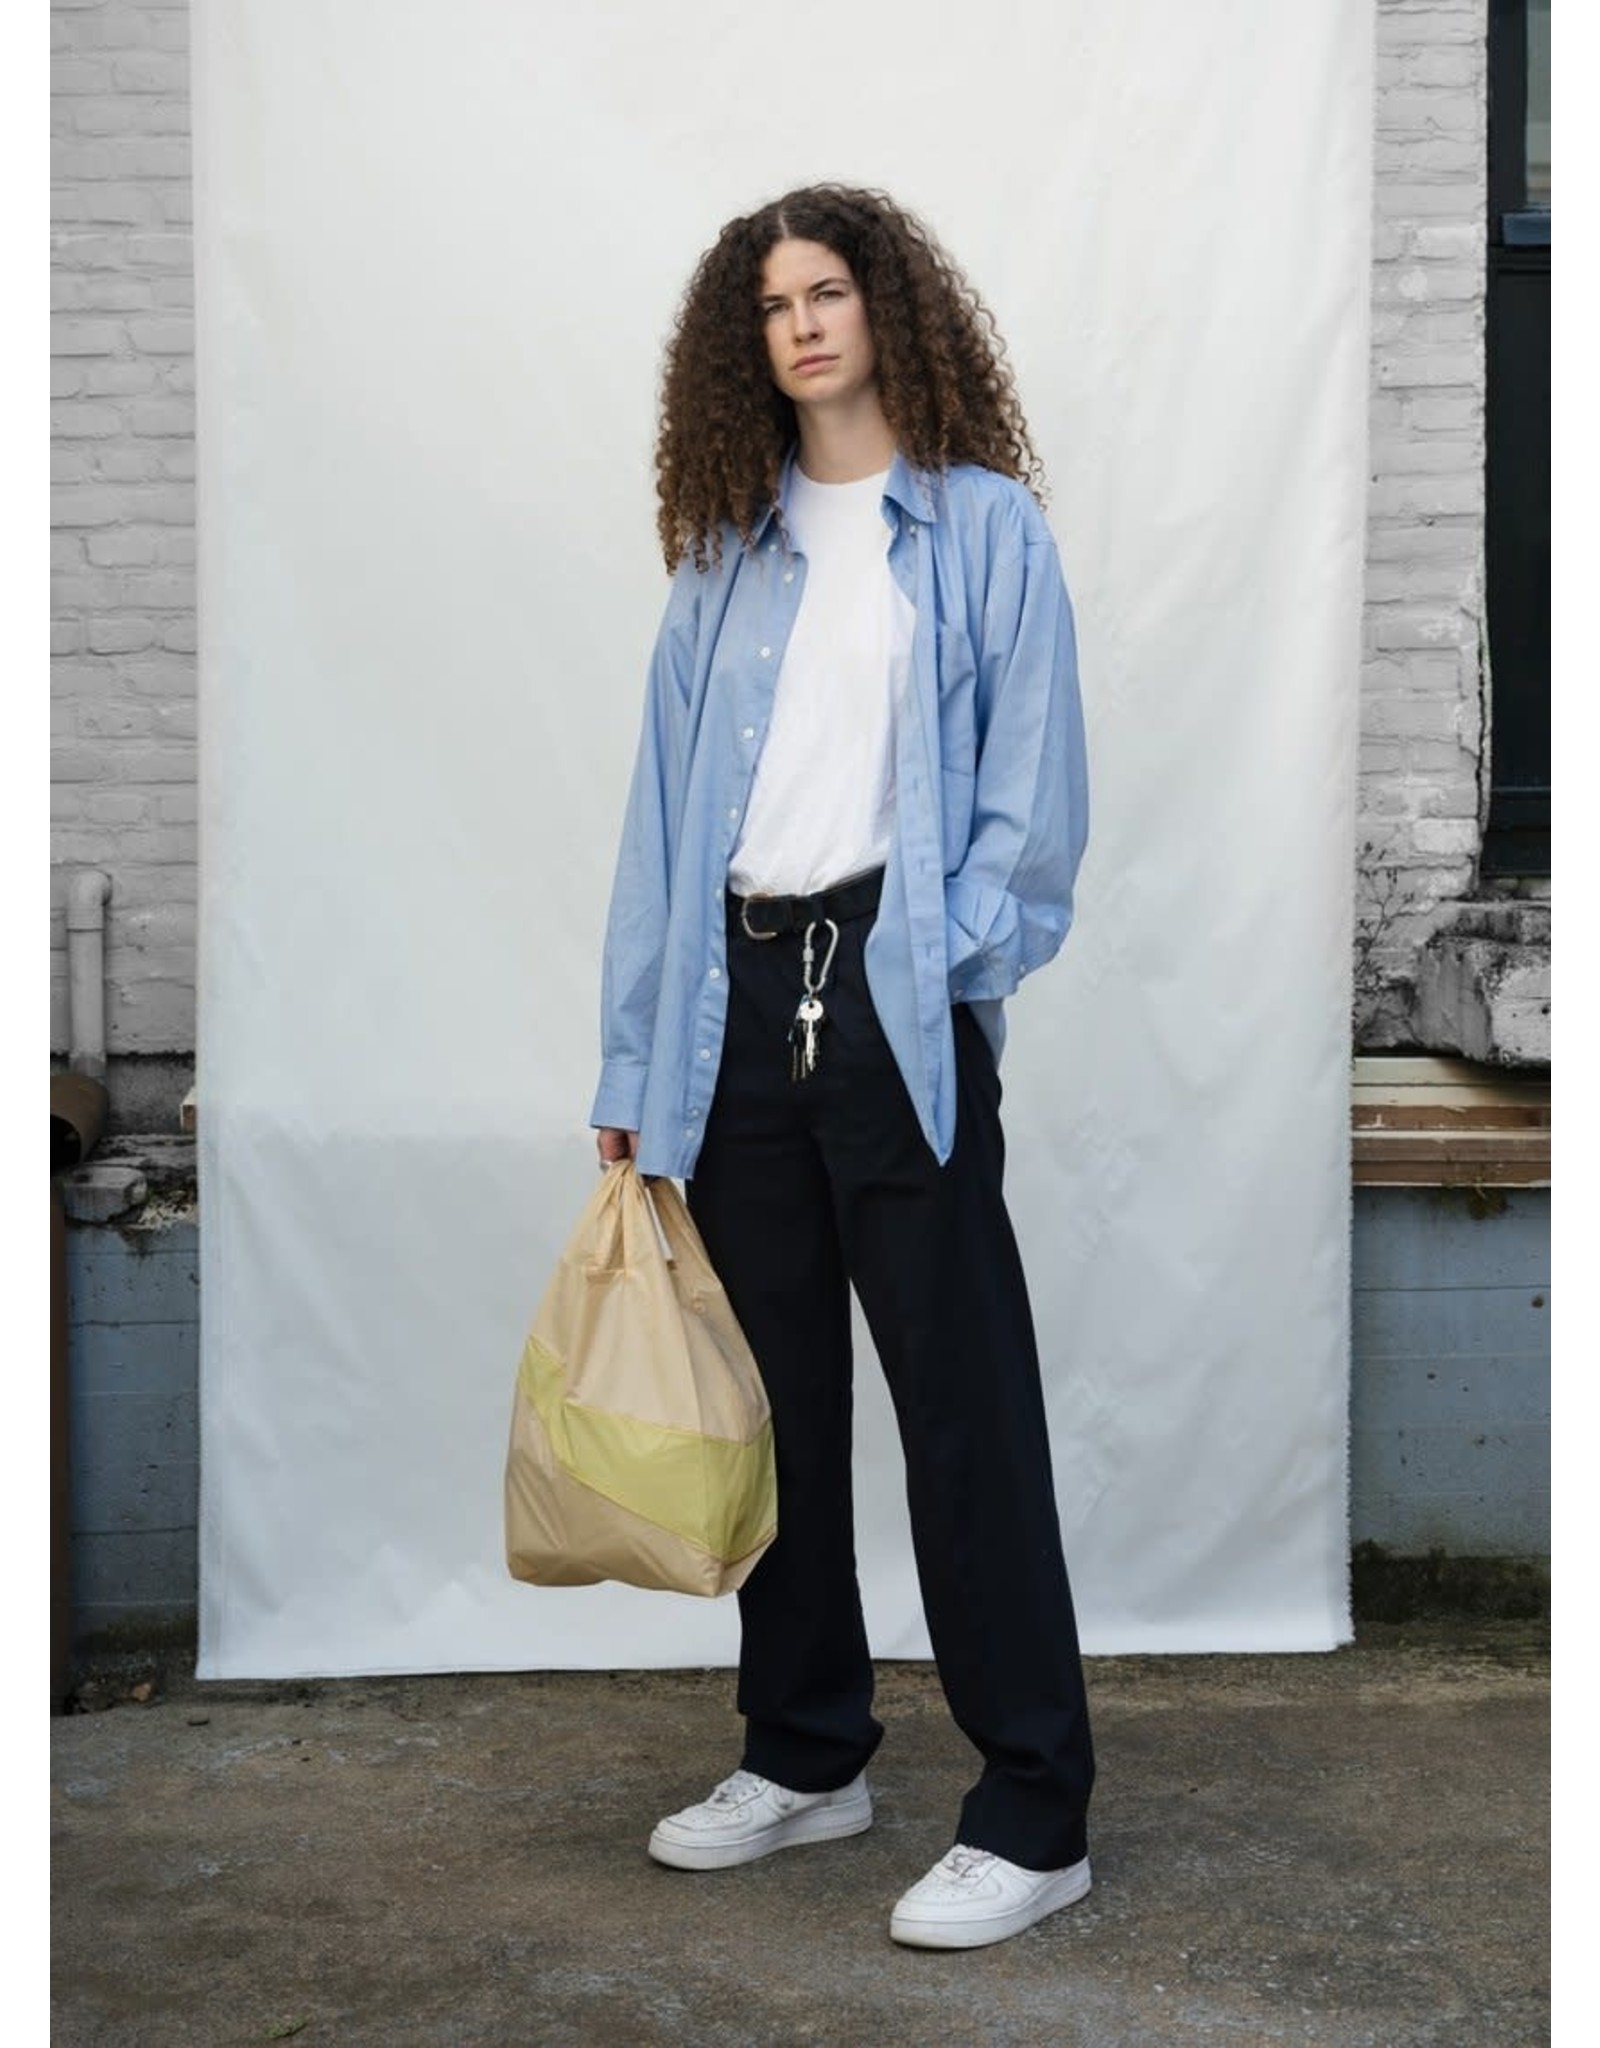 Susan Bijl Shopping bag M,  Liu & Vinex - 27 x 55 x 18 cm